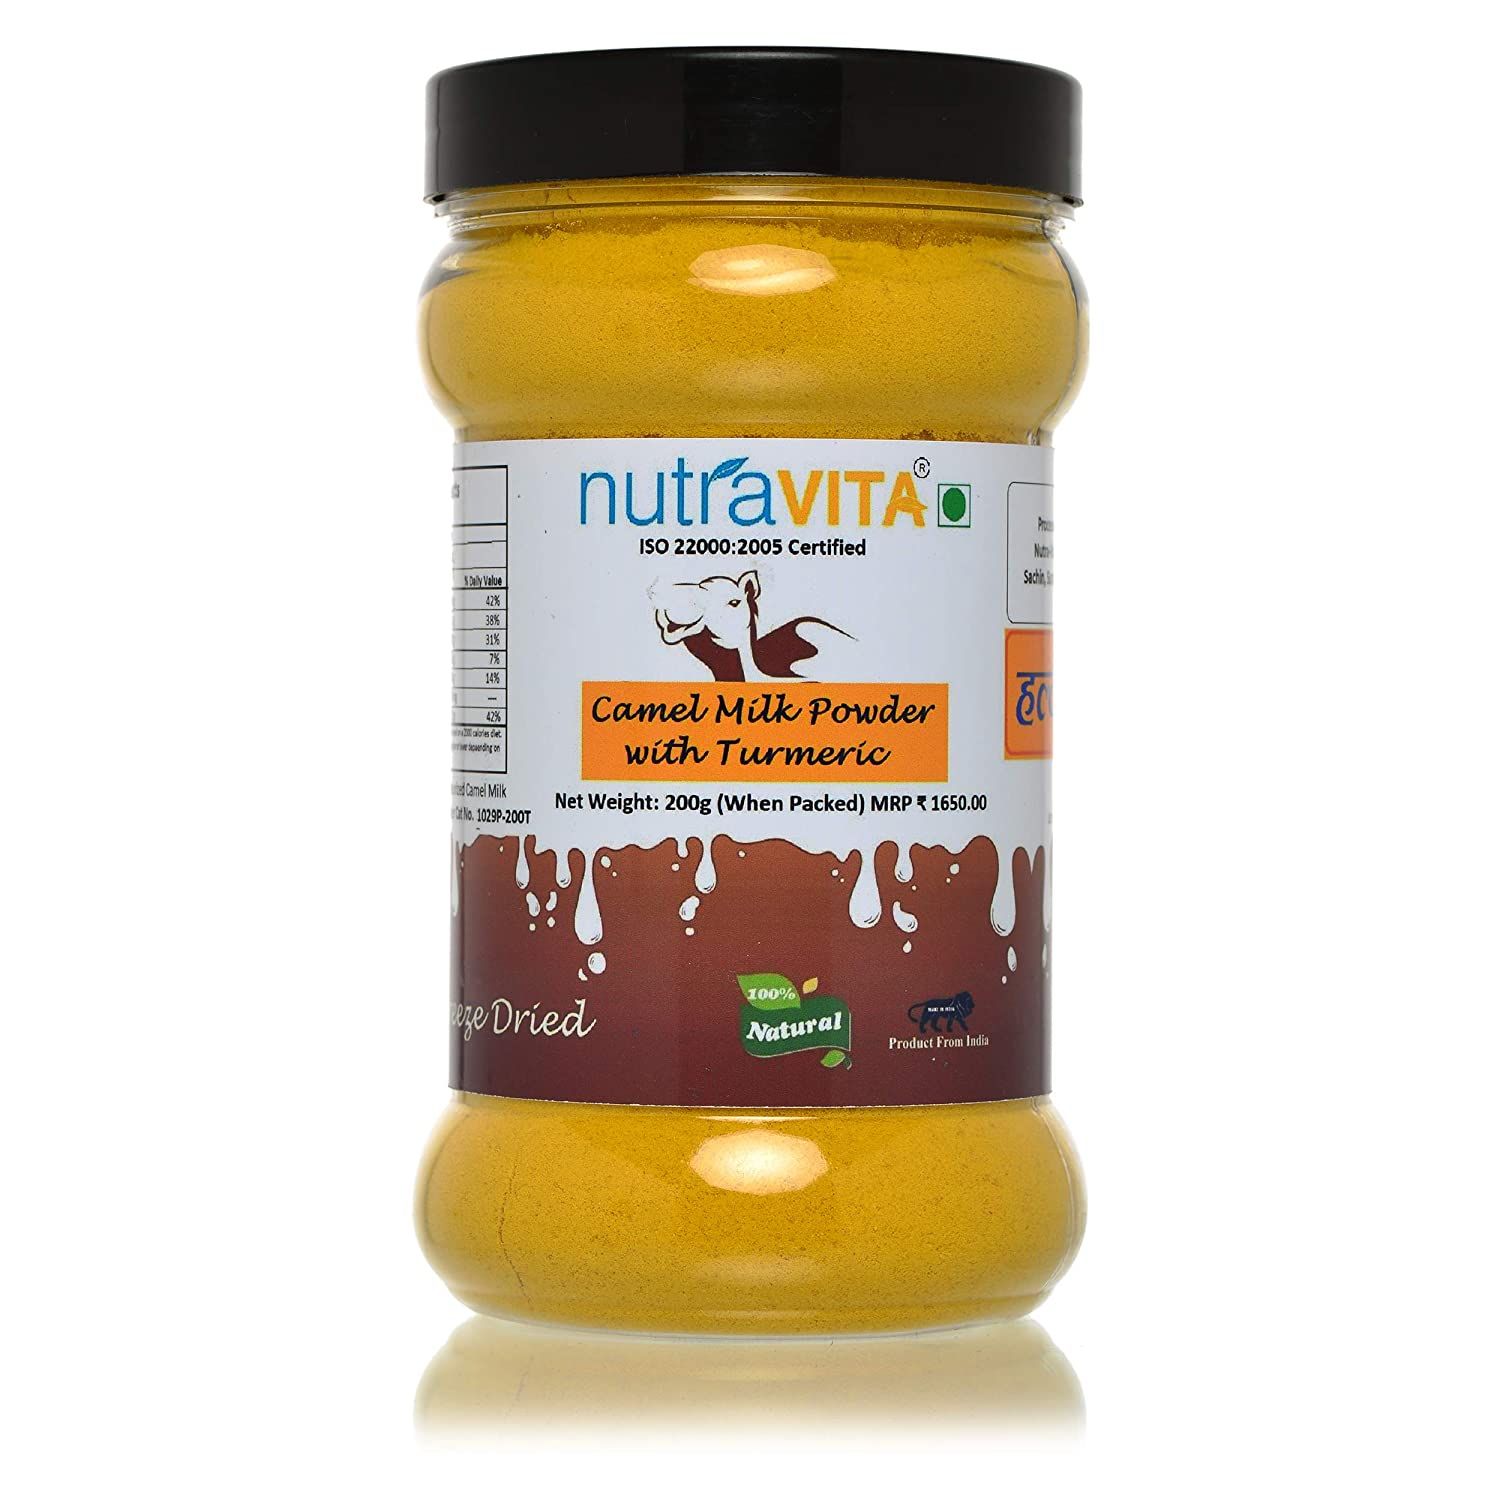 Nutravita Camel Milk Powder With Turmeric Powder Image